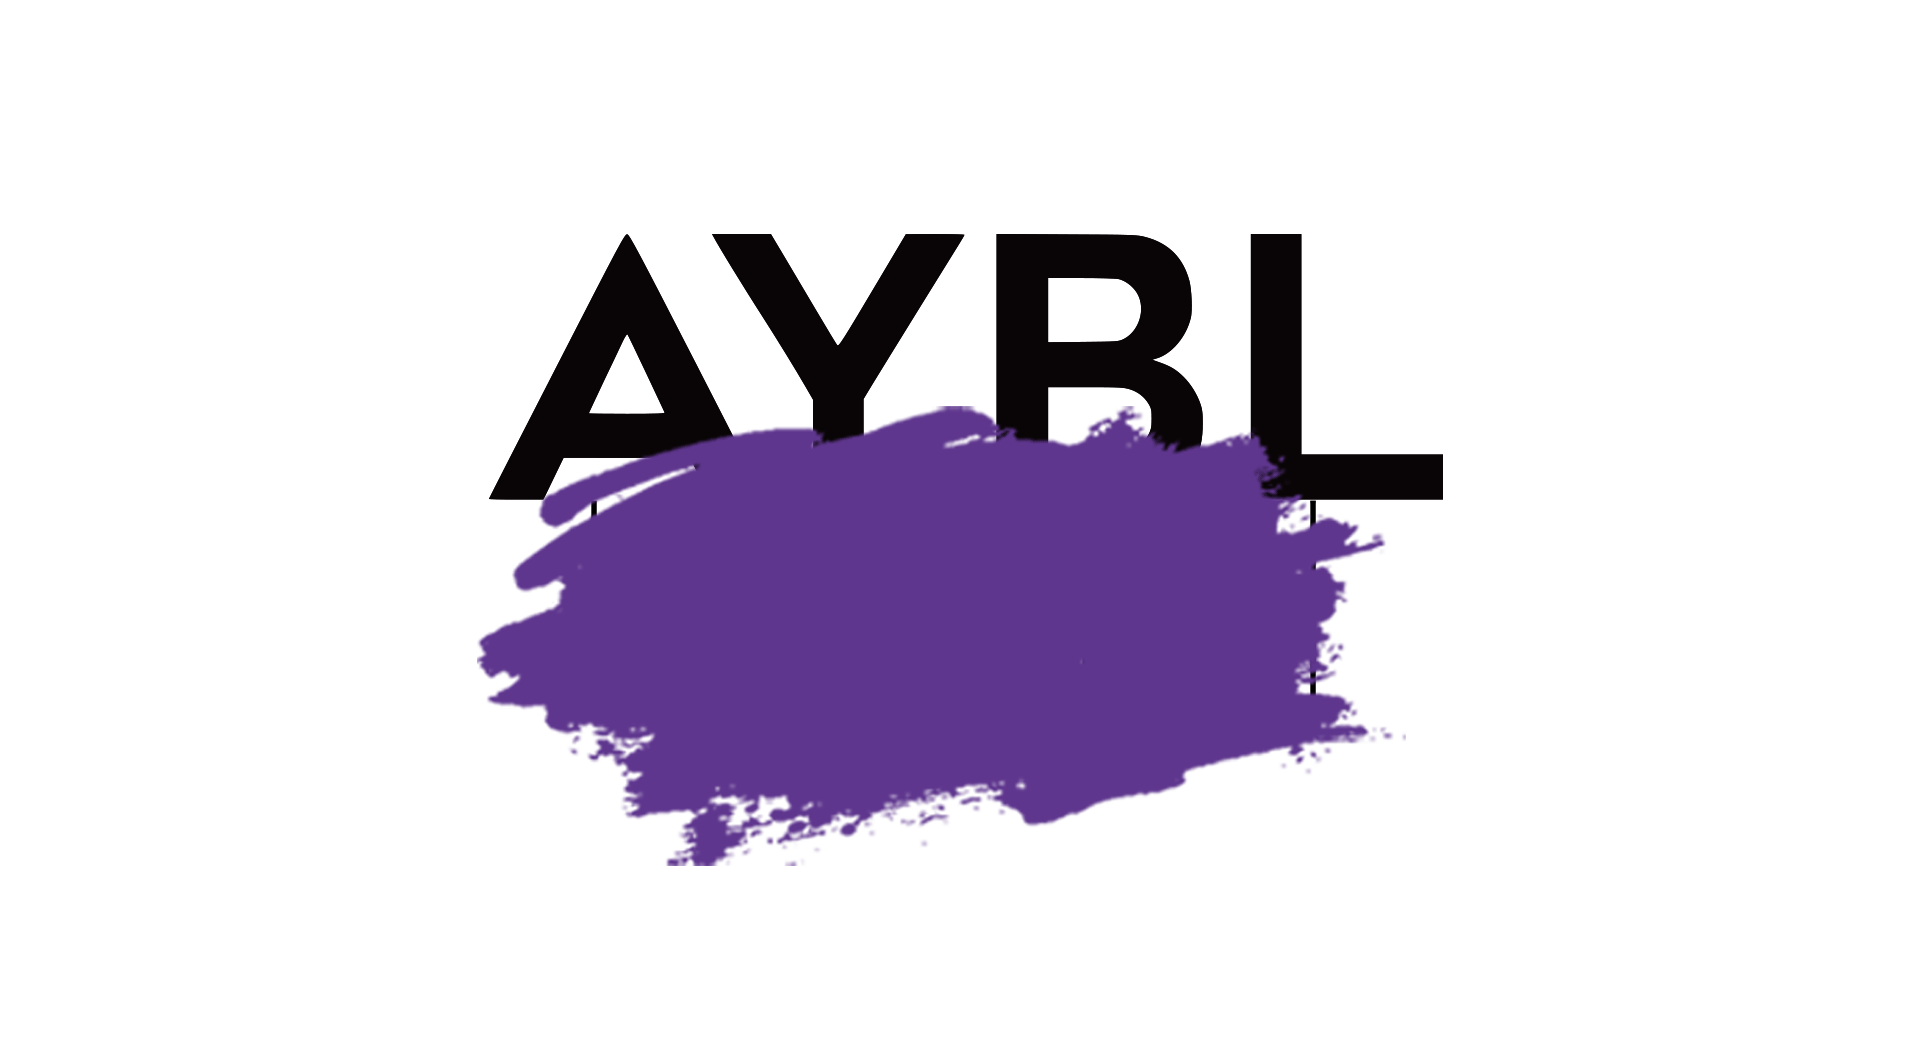 AYBL X LDN Pop-Up Store